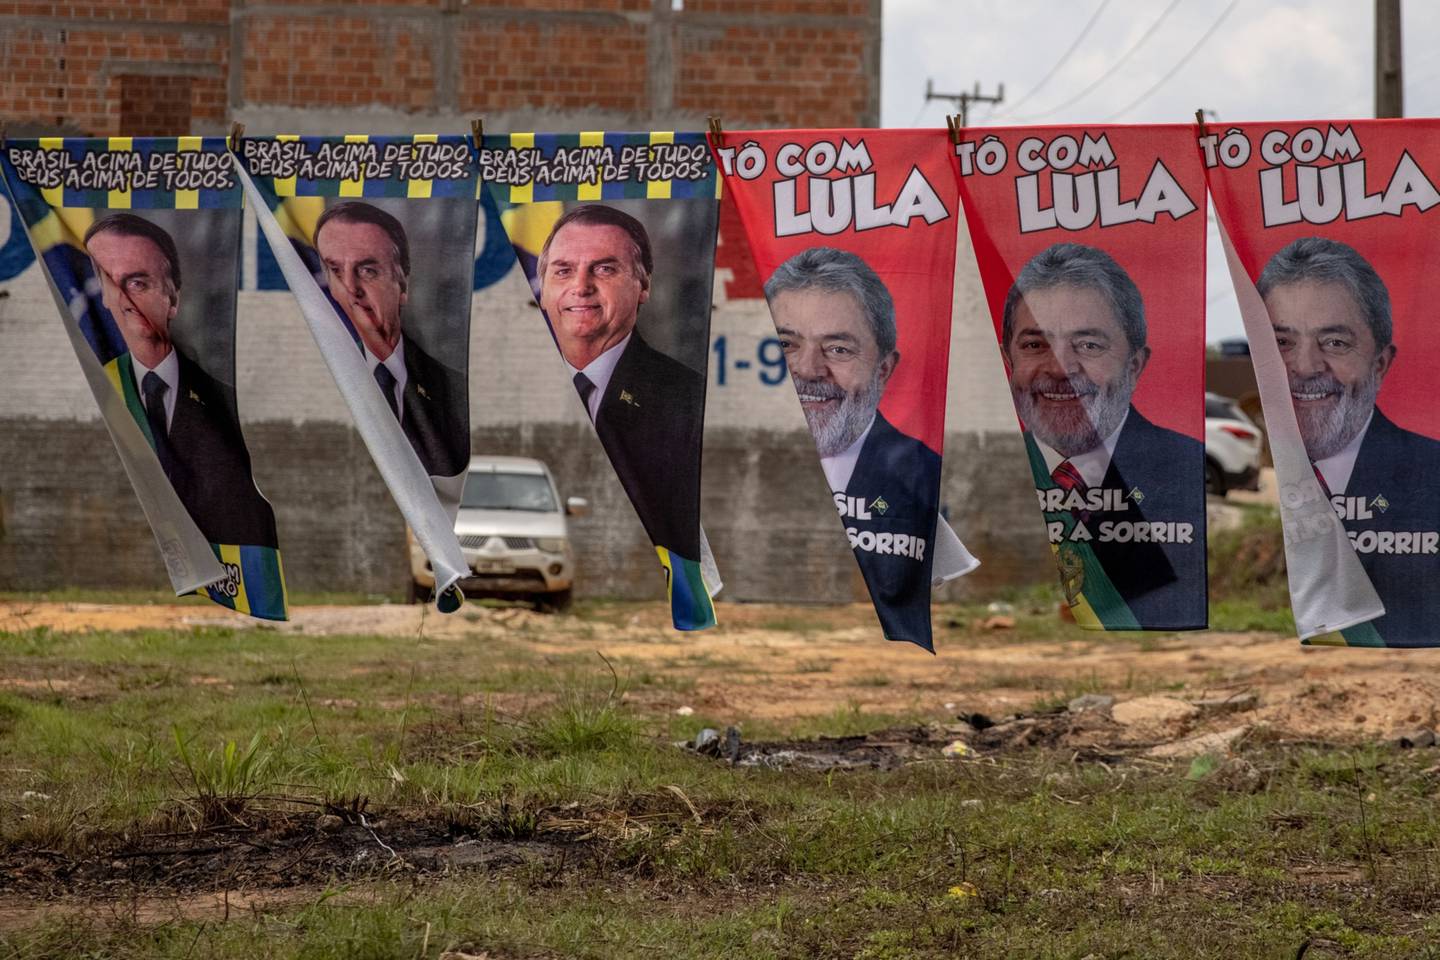 Towels for sale with the faces of president Jair Bolsonaro and presidential hopeful Luiz Inacio Lula da Silva.